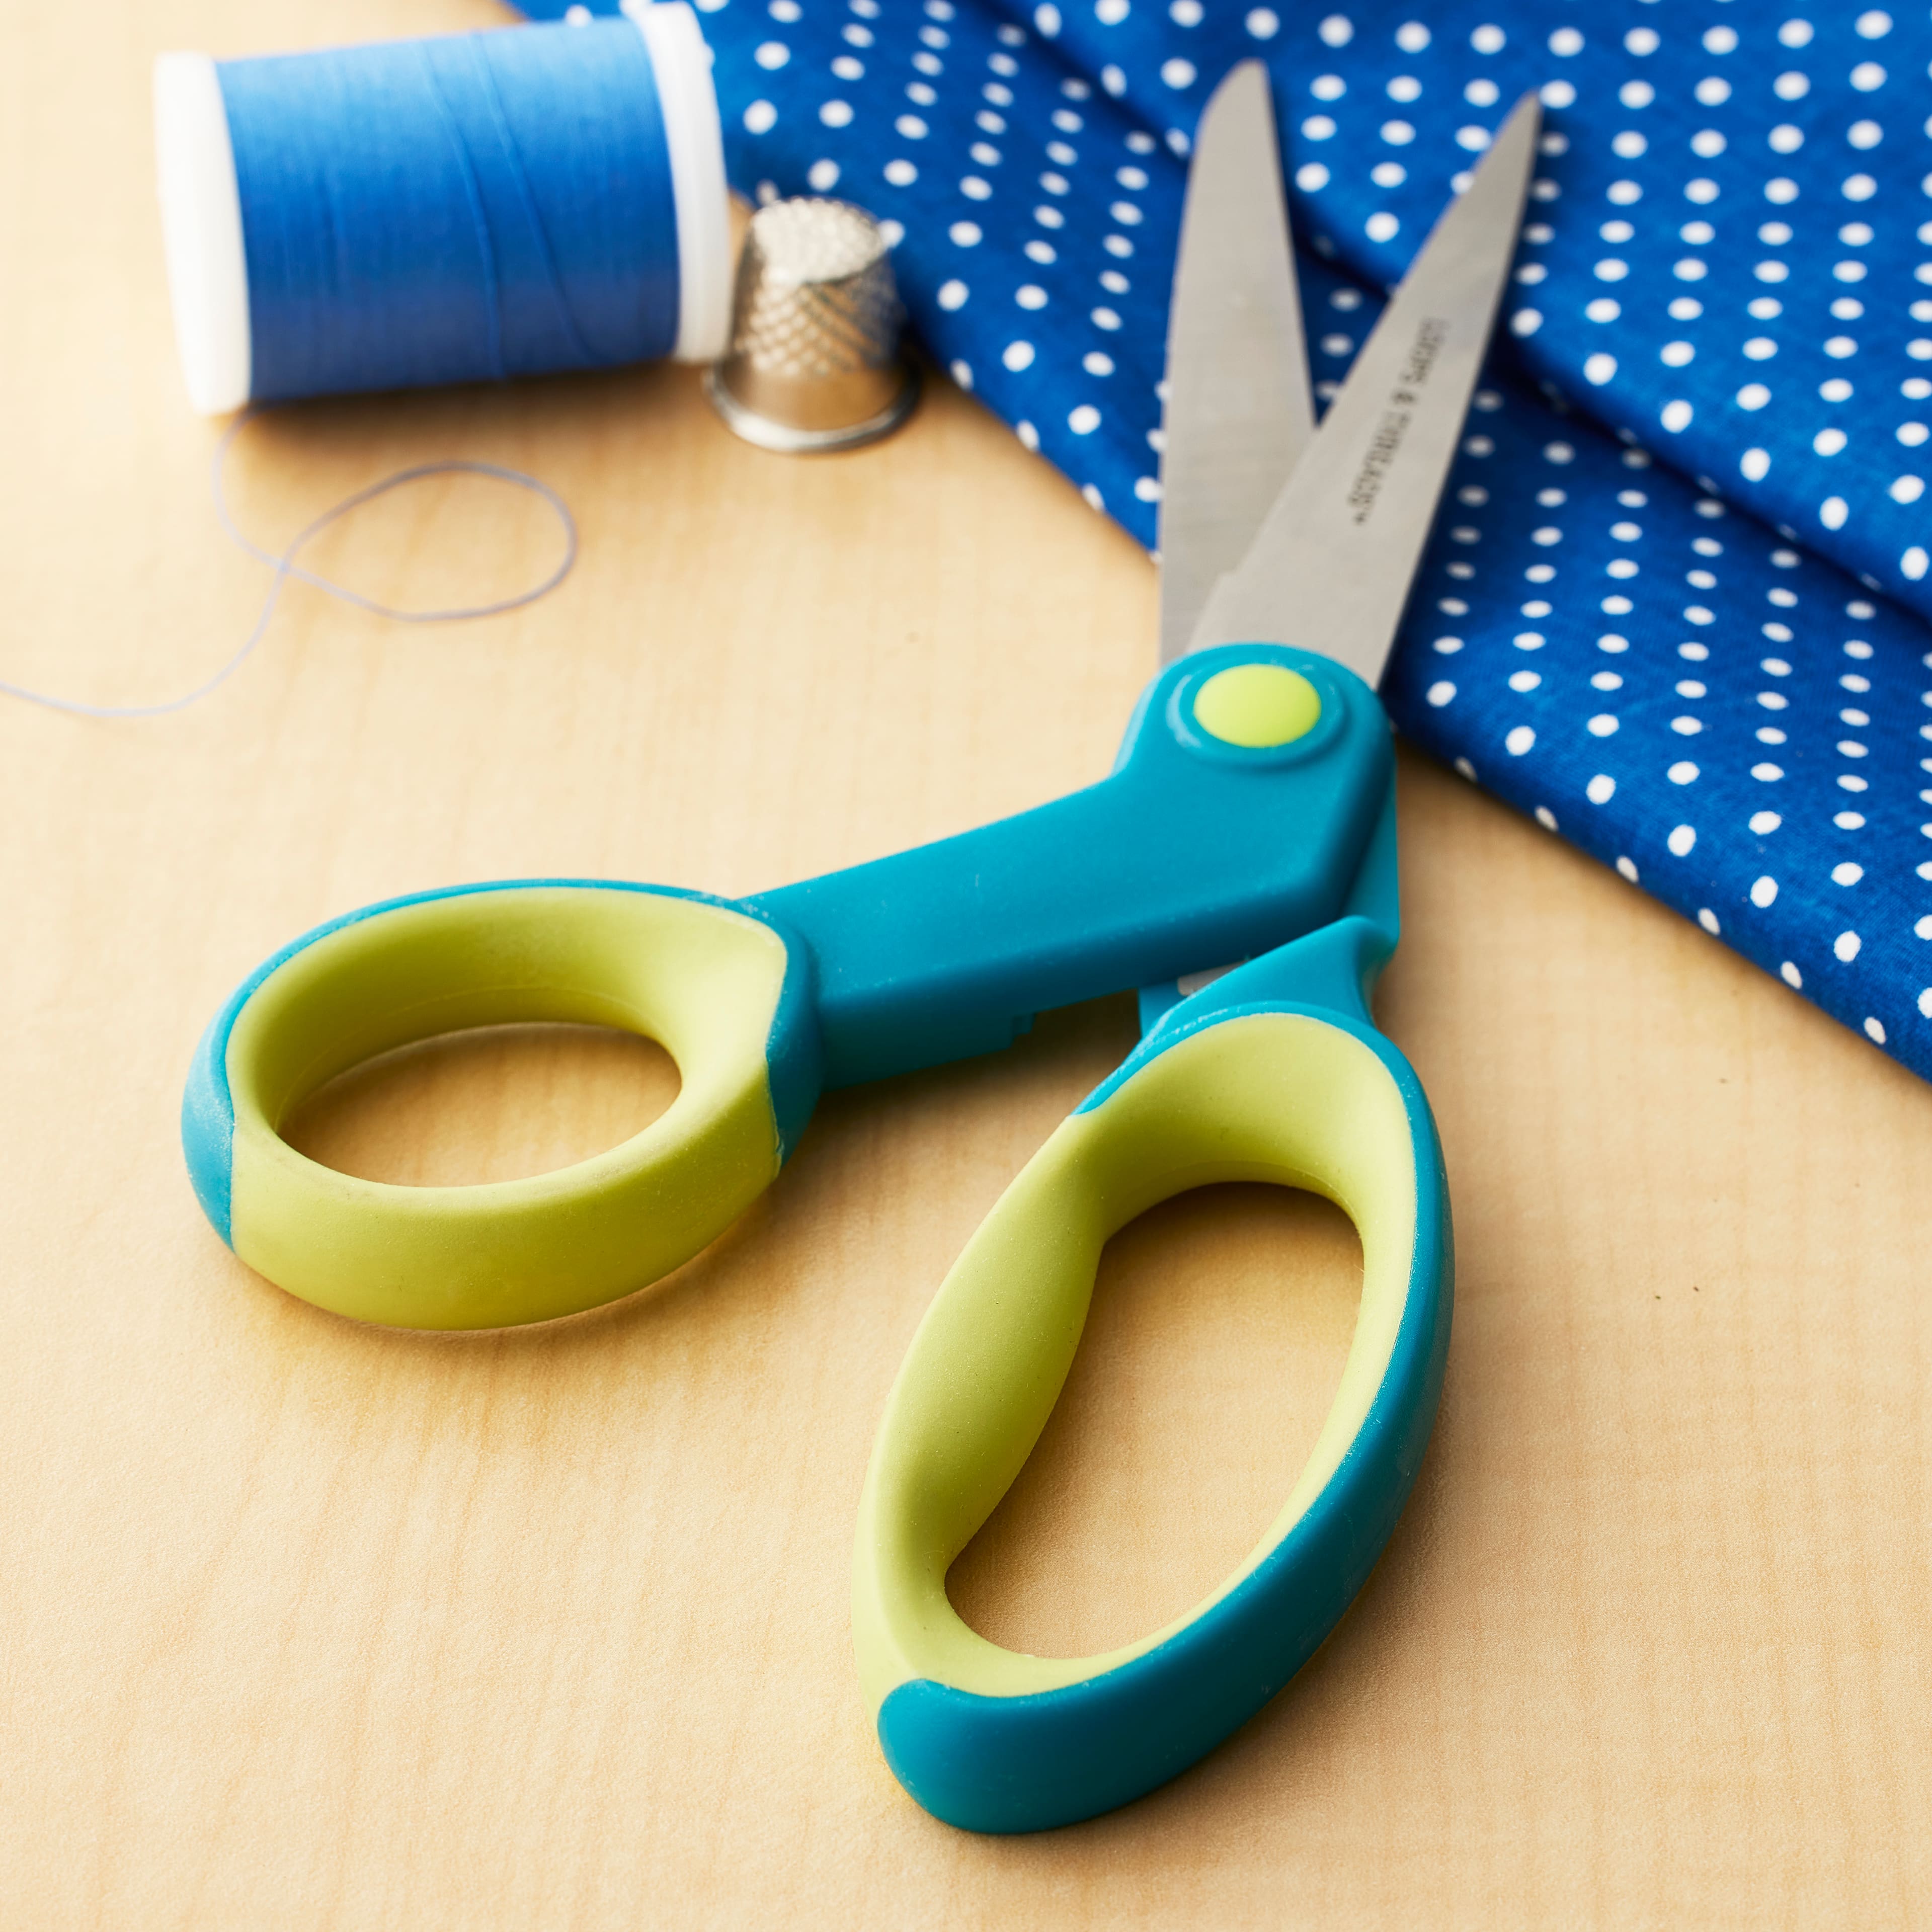 Left-Handed Bent Scissors by Loops &#x26; Threads&#x2122;